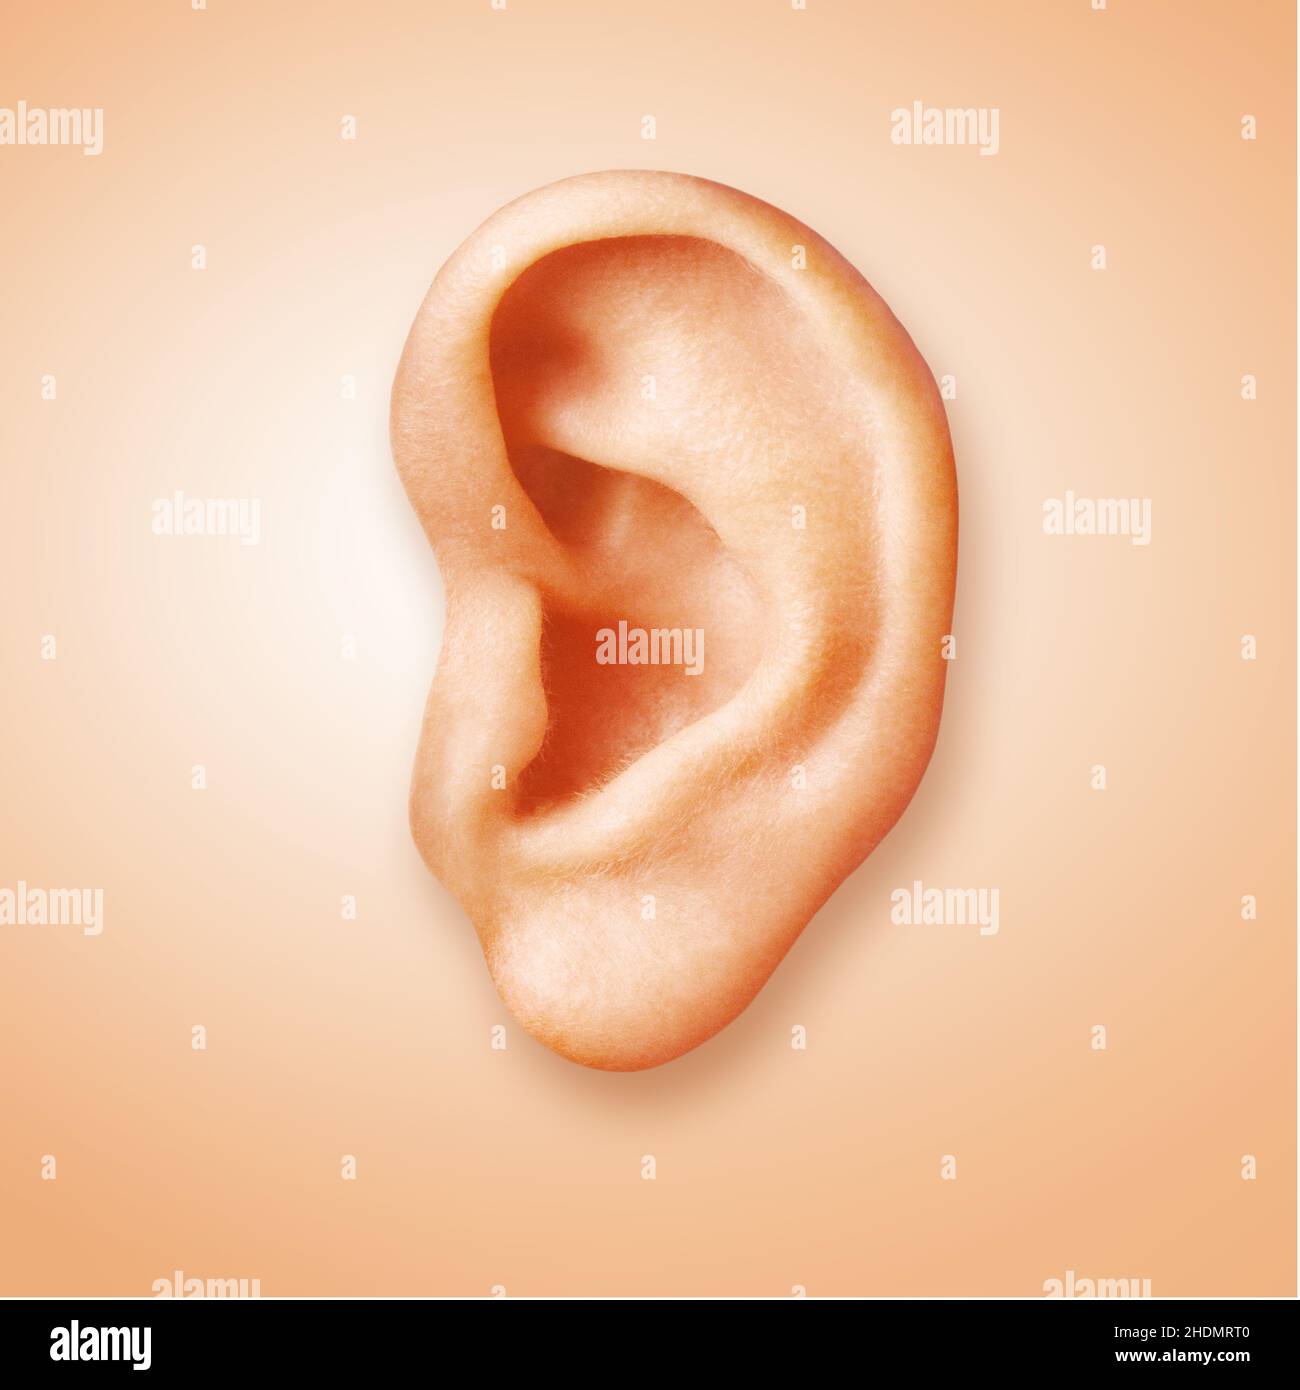 animal ear, sense organ, auricle, animal ears, ear, ears, sense organs, auricles Stock Photo